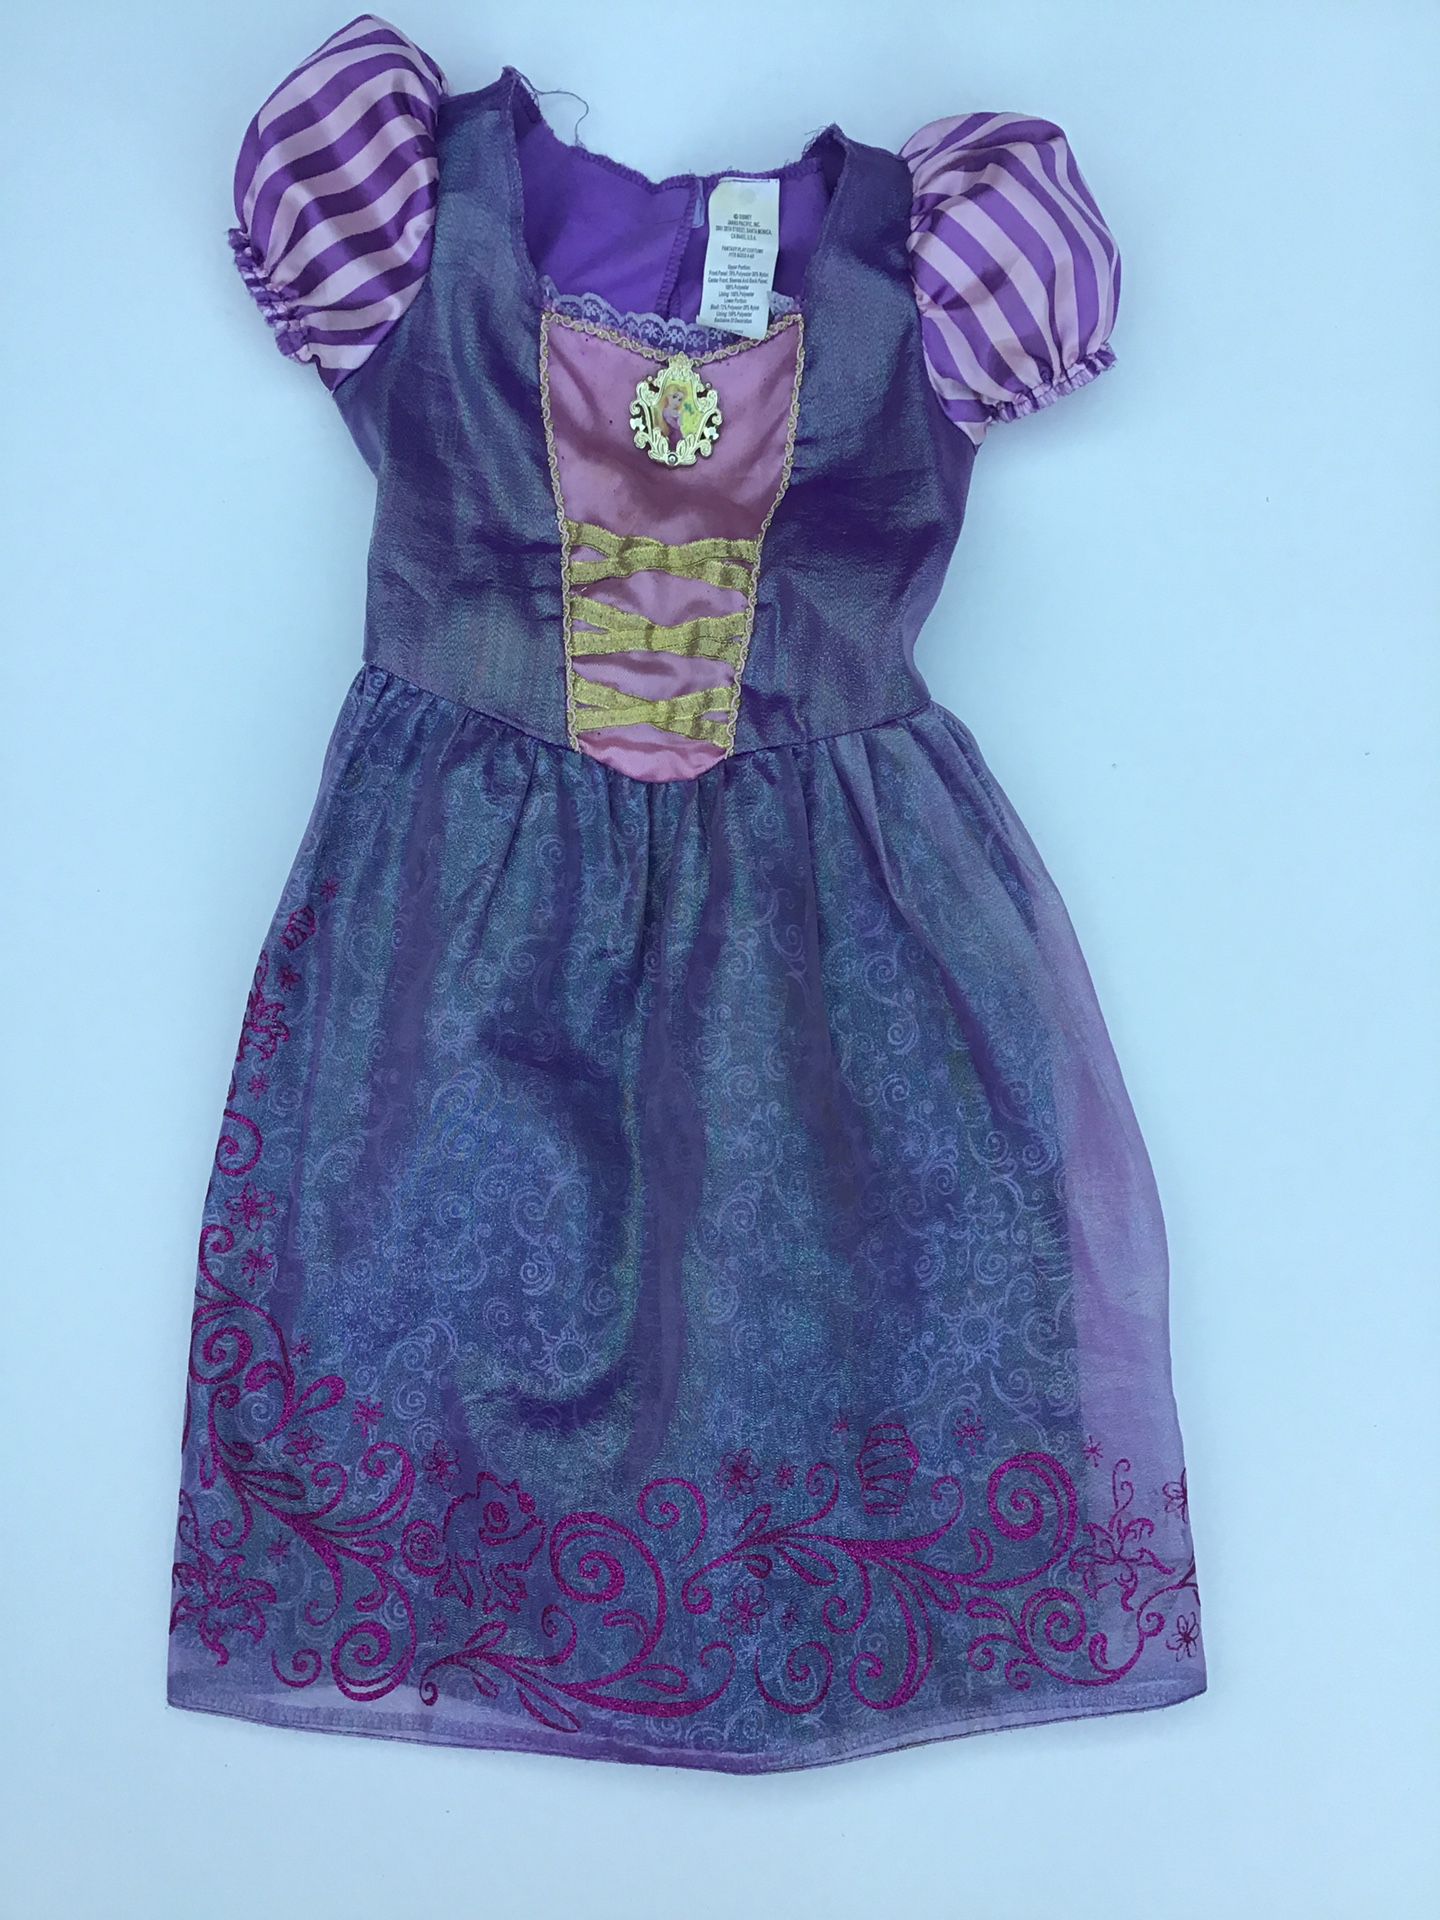 Rapunzel princess dress Size 4-6x